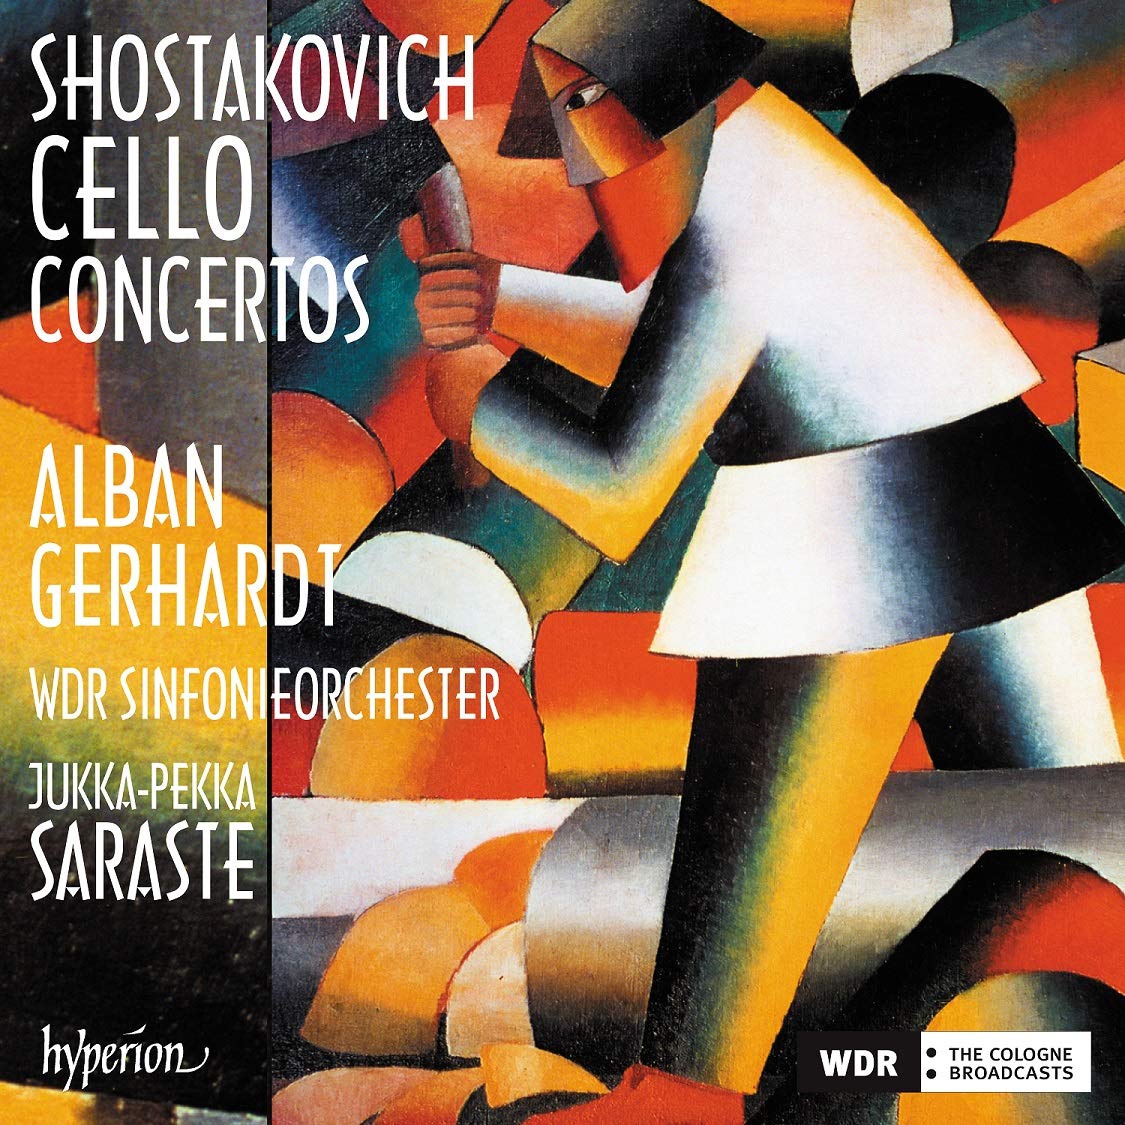 Alban Gerhardt, WDR Sinfonieorchester & Jukka-Pekka Saraste - Shostakovich: Cello Concertos (2020) [FLAC 24bit/96kHz]